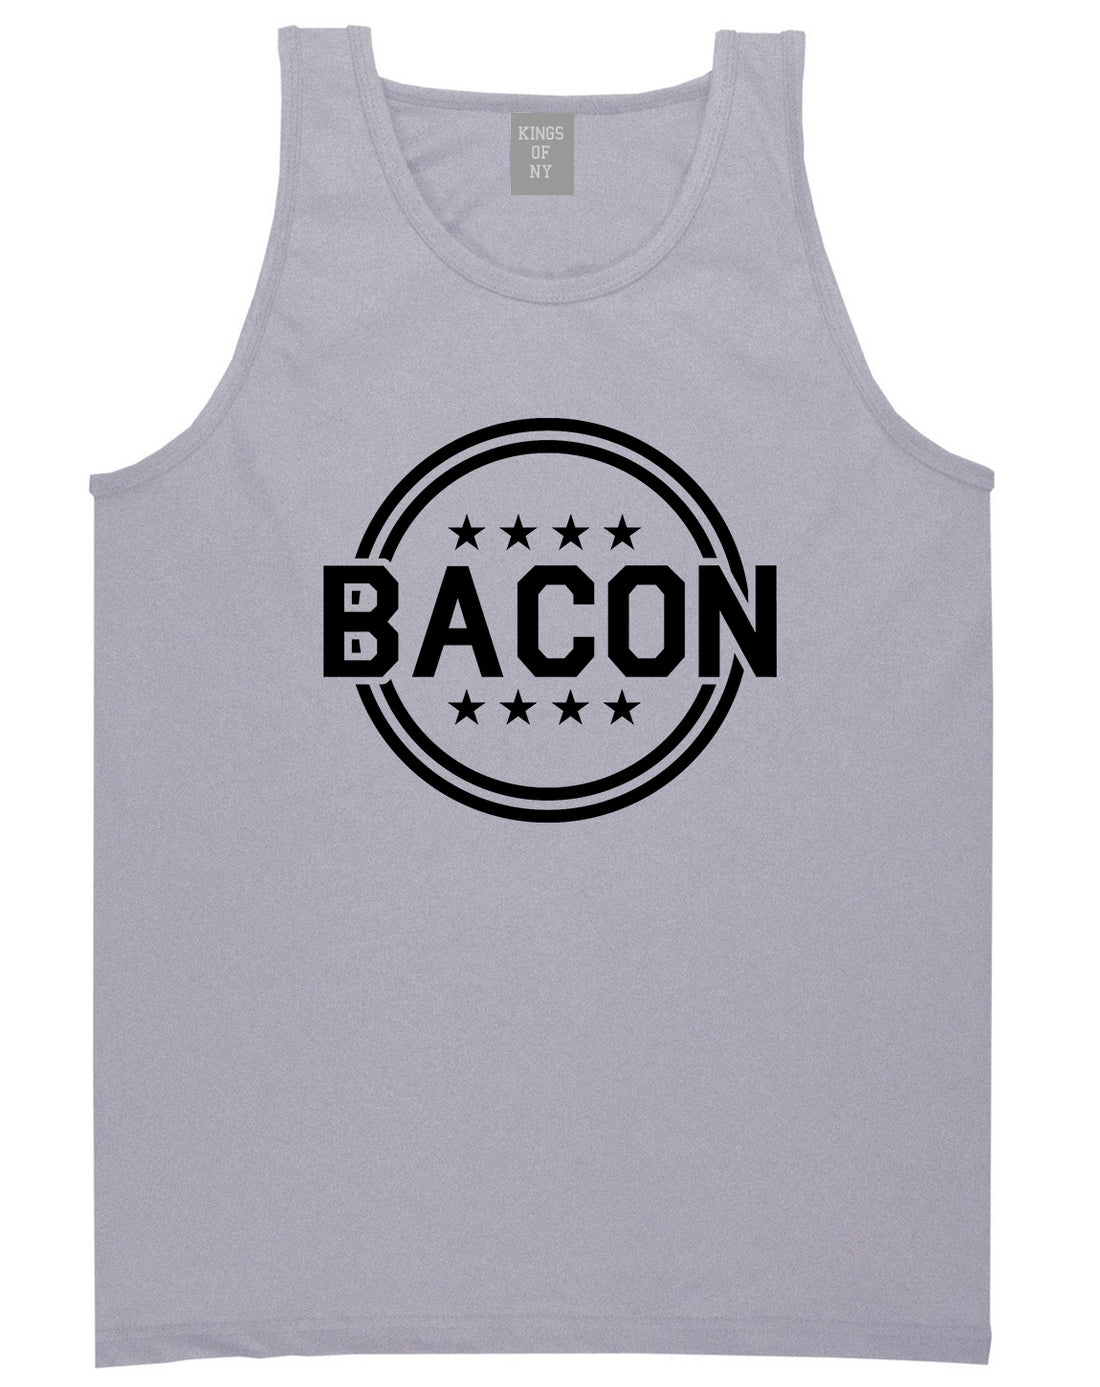 Bacon Stars Grey Tank Top Shirt by Kings Of NY